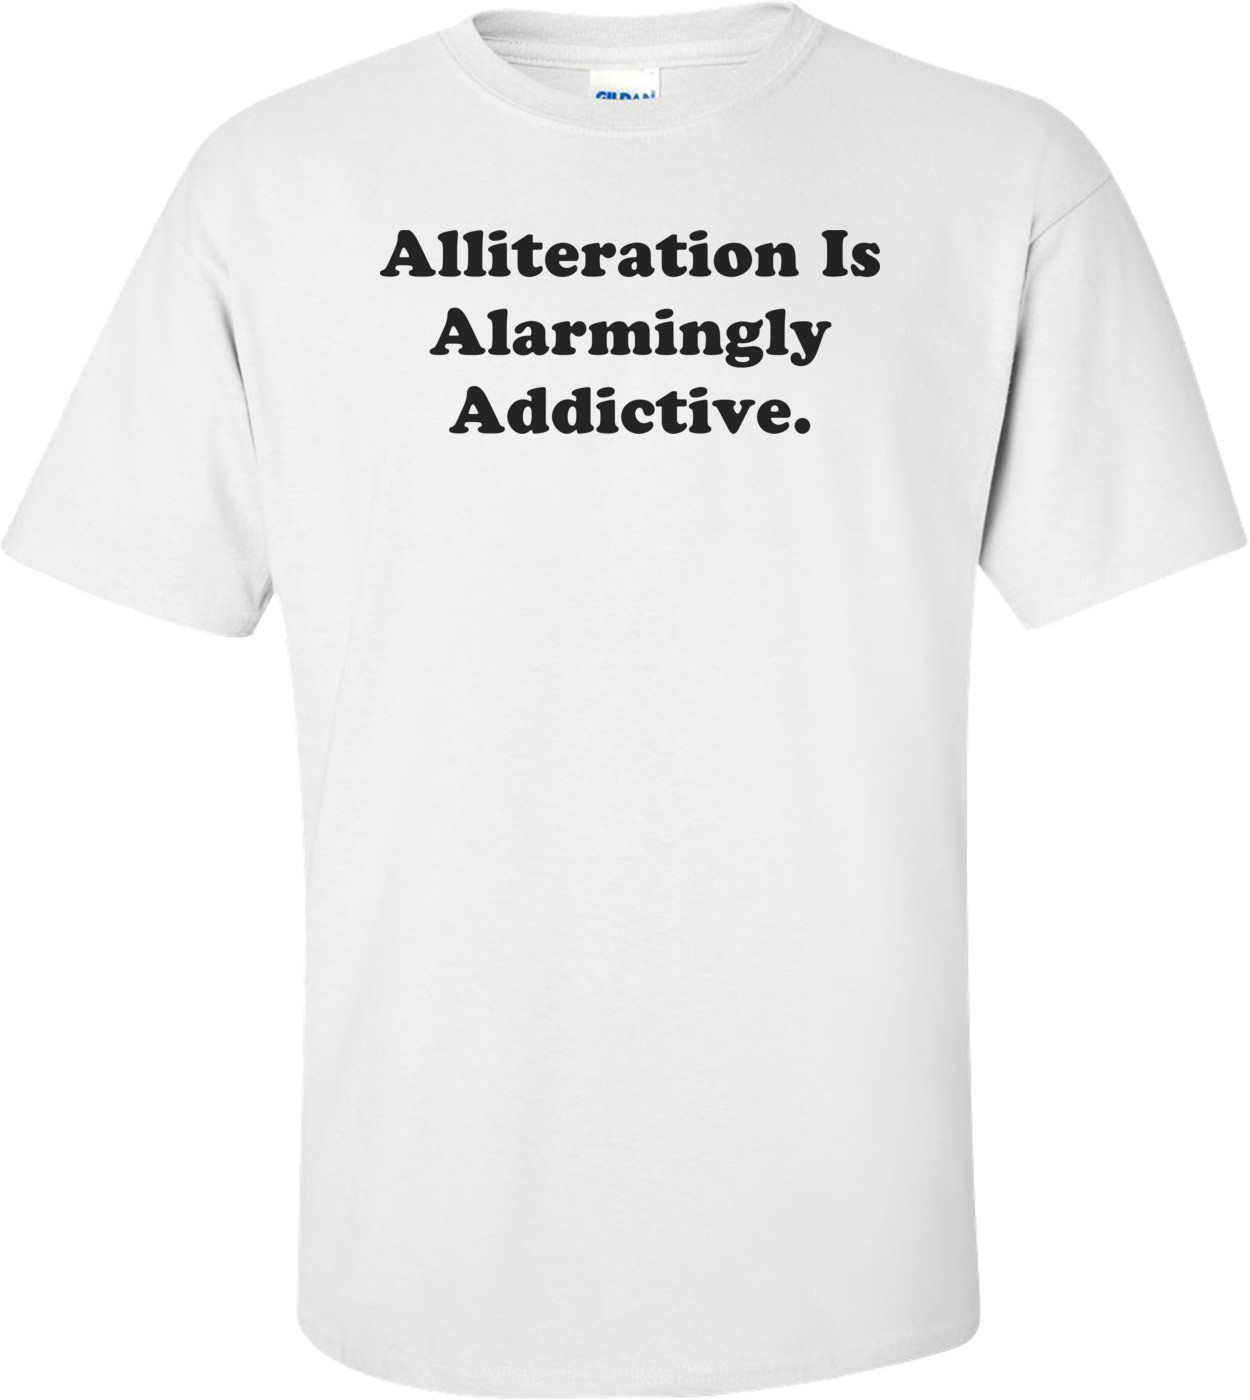 Alliteration Is Alarmingly Addictive. Shirt